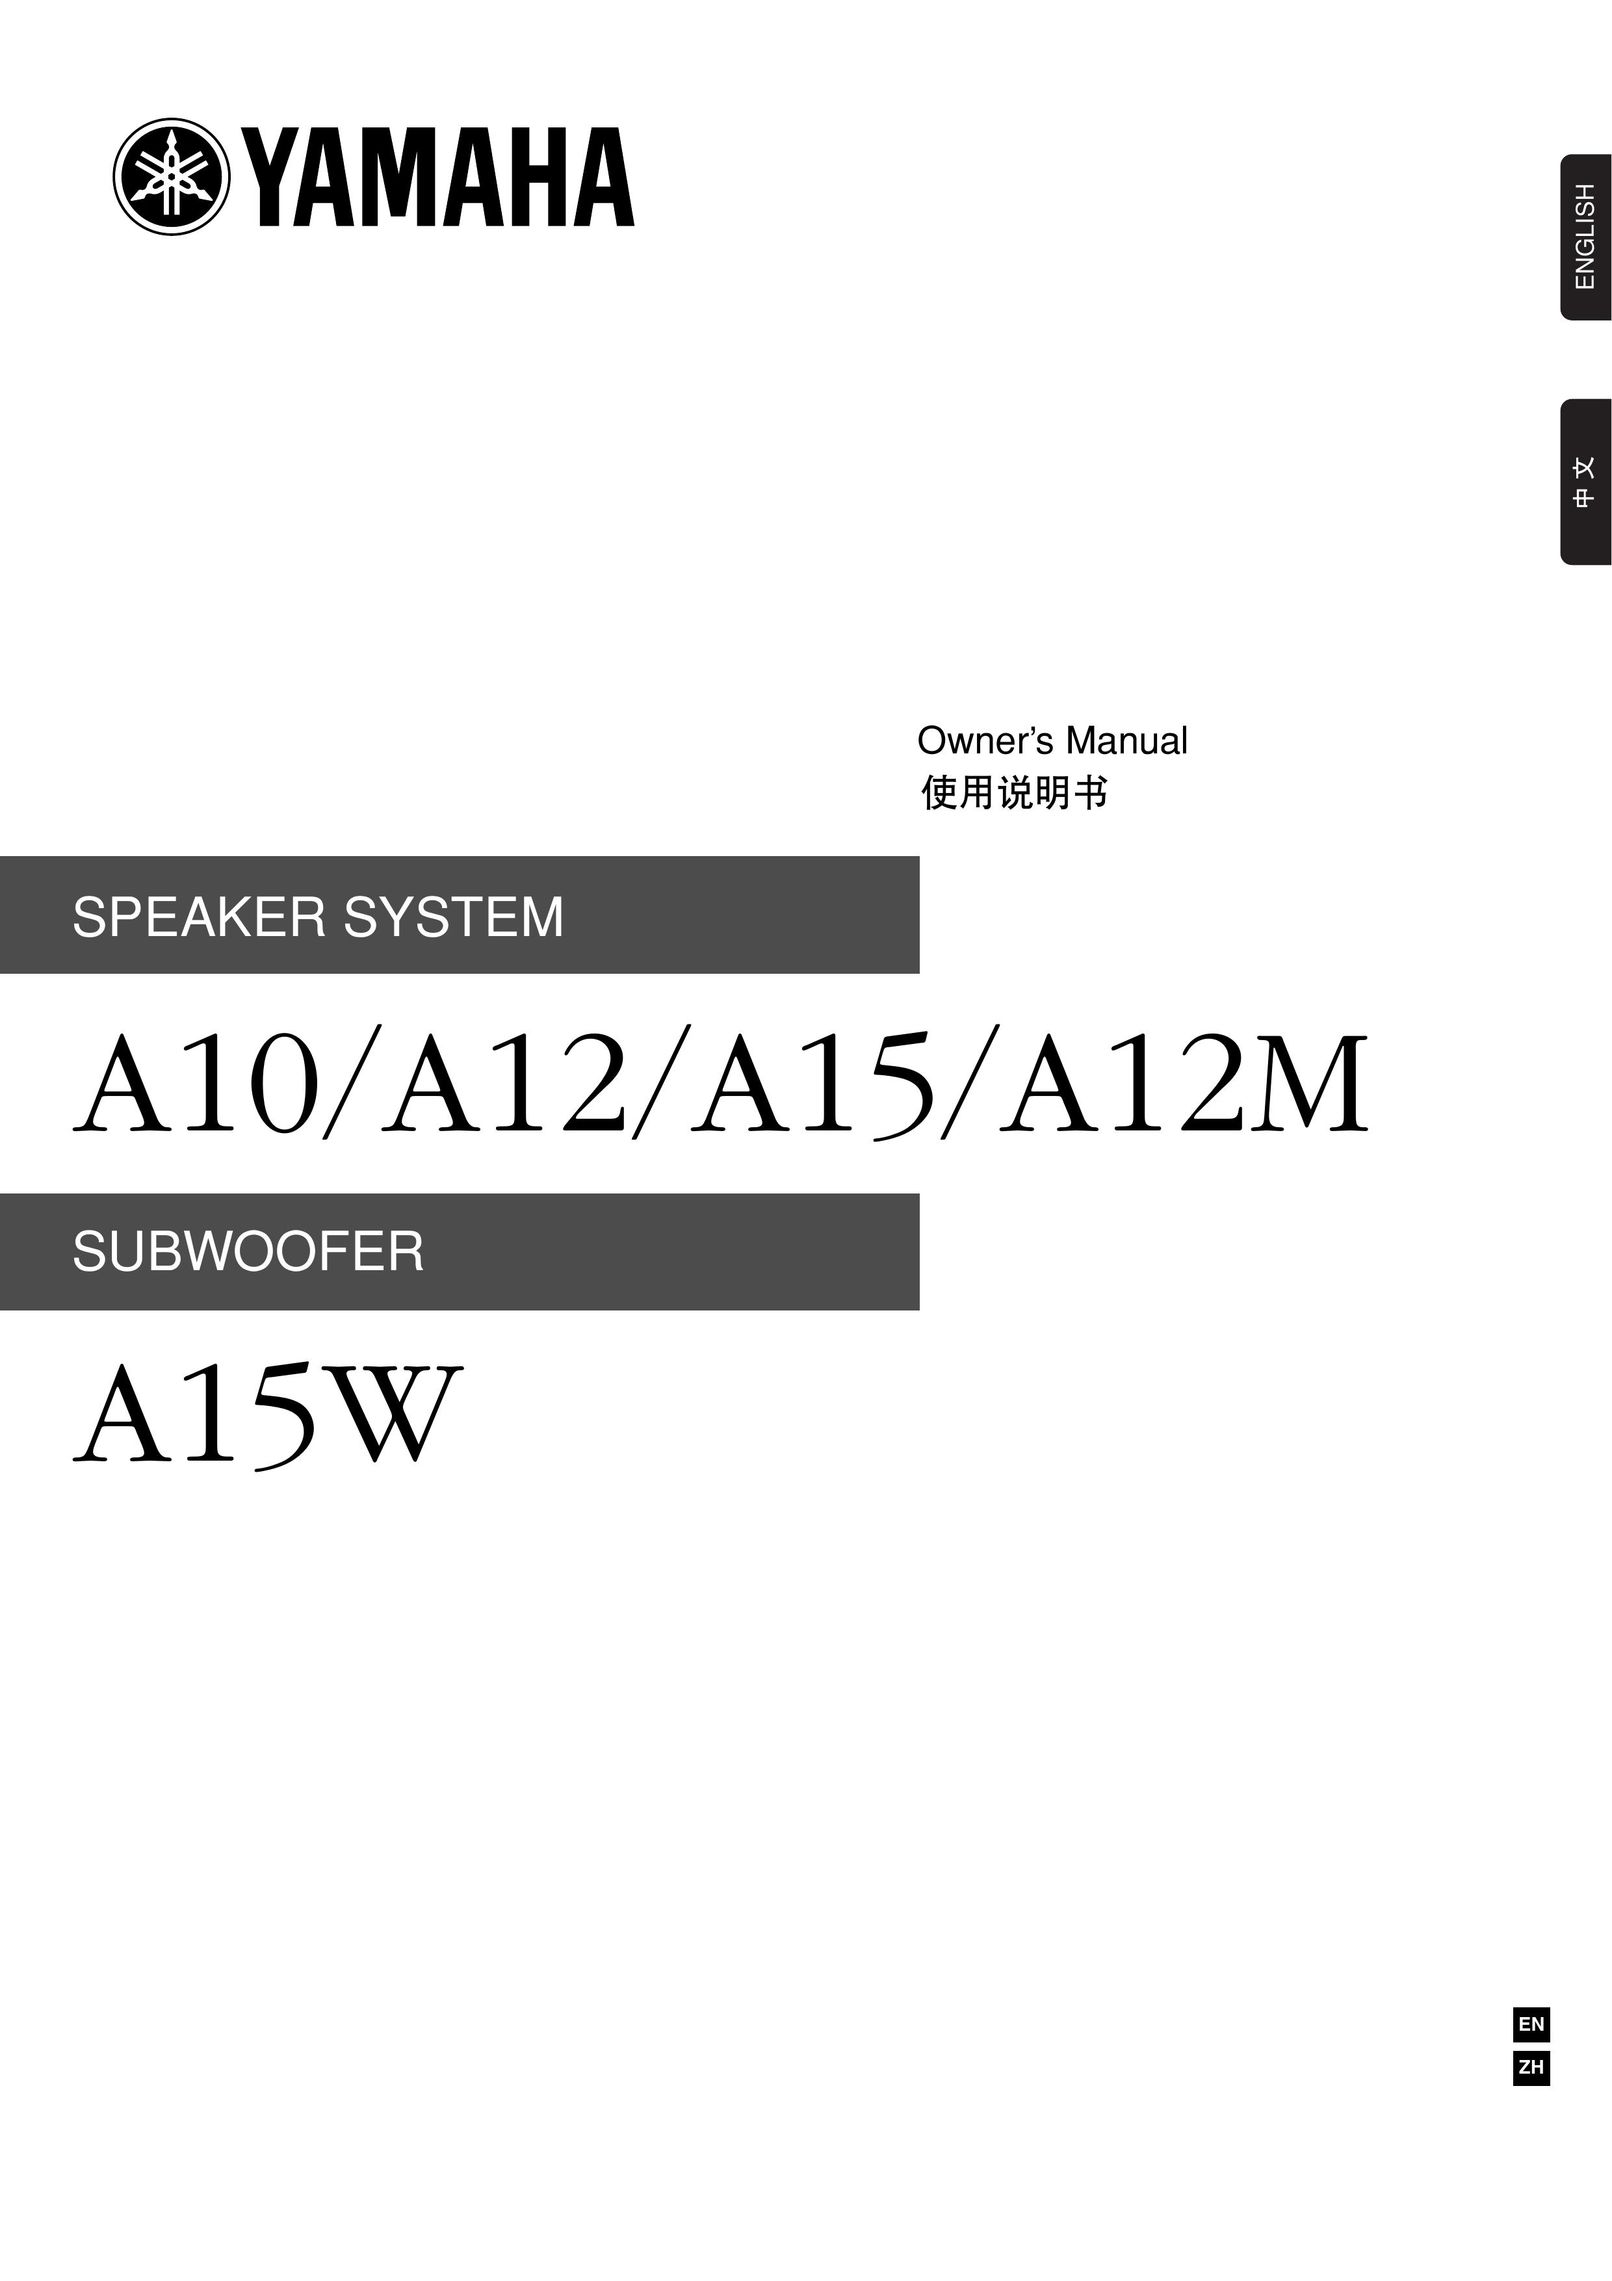 Yamaha A15W Portable Speaker User Manual